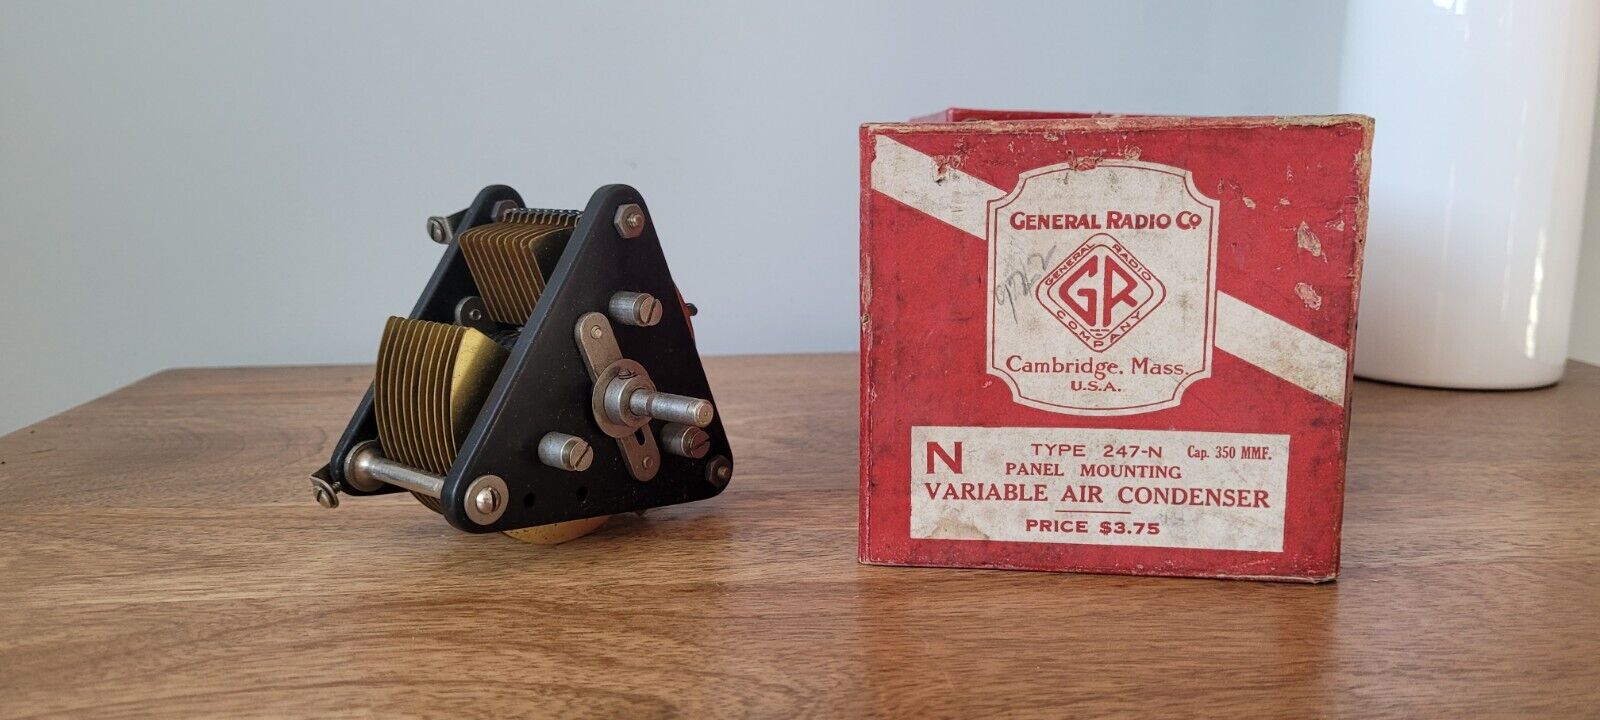 Vintage General Radio Co Panel Mounting Variable Air Condenser  Type 247-N